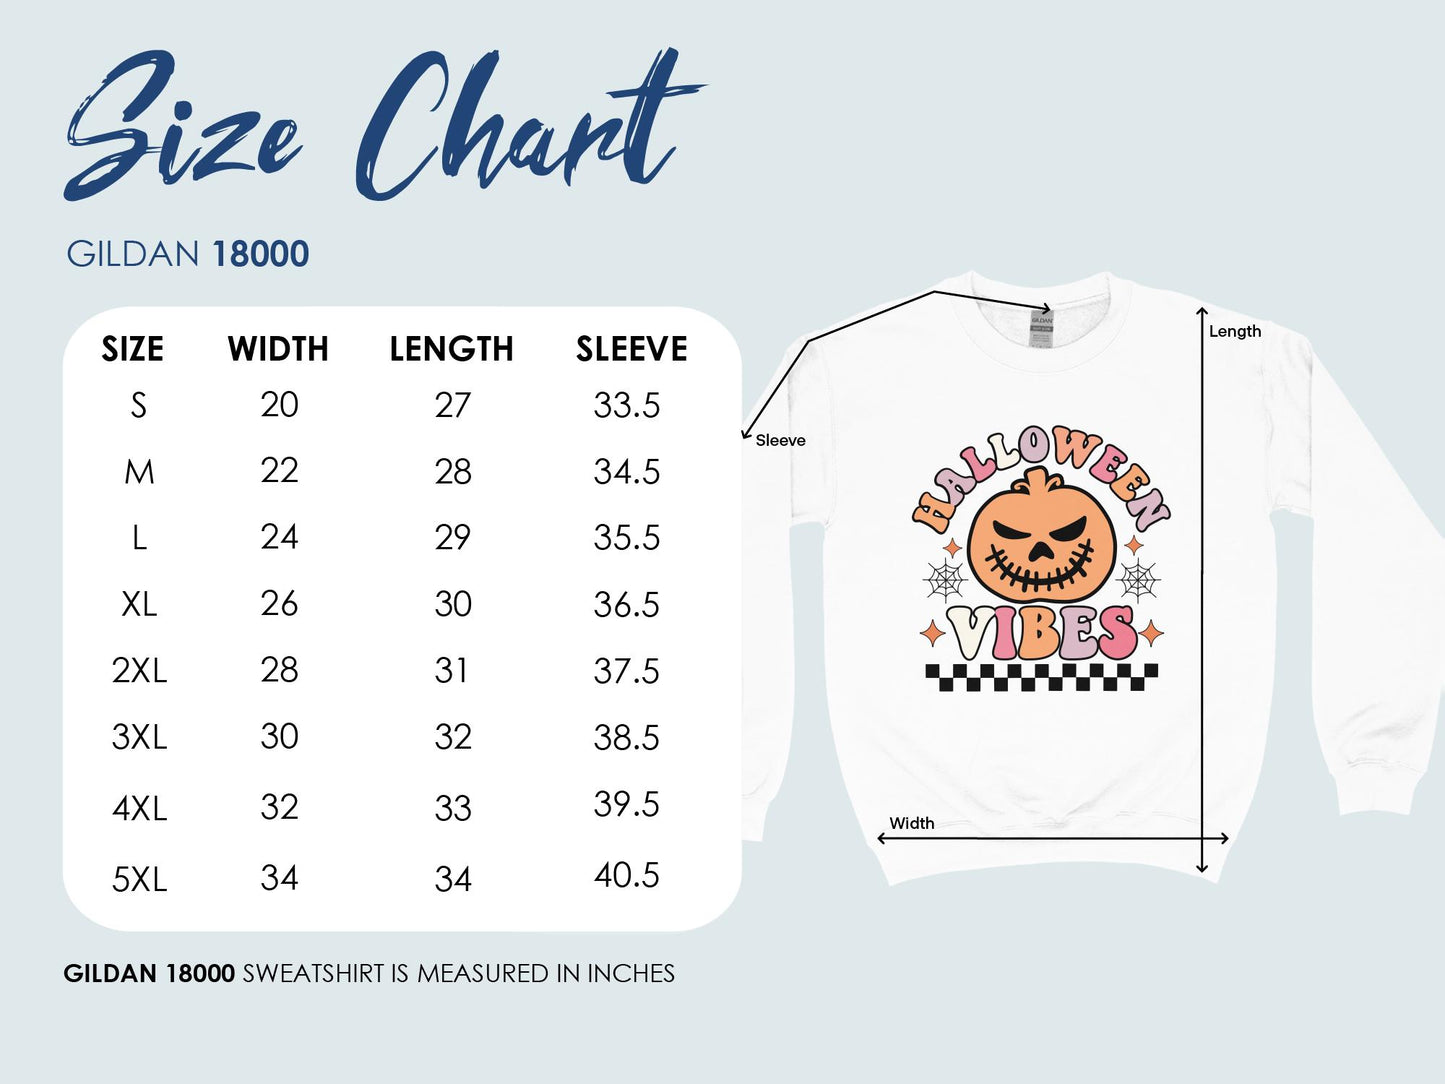 Halloween Vibes Shirt, Hocus Pocus Shirt, Witch shirt, Sanderson Sisters, Witch shirt, Funny Halloween Sweatshirt, Ghost Shirt - Mardonyx Sweatshirt